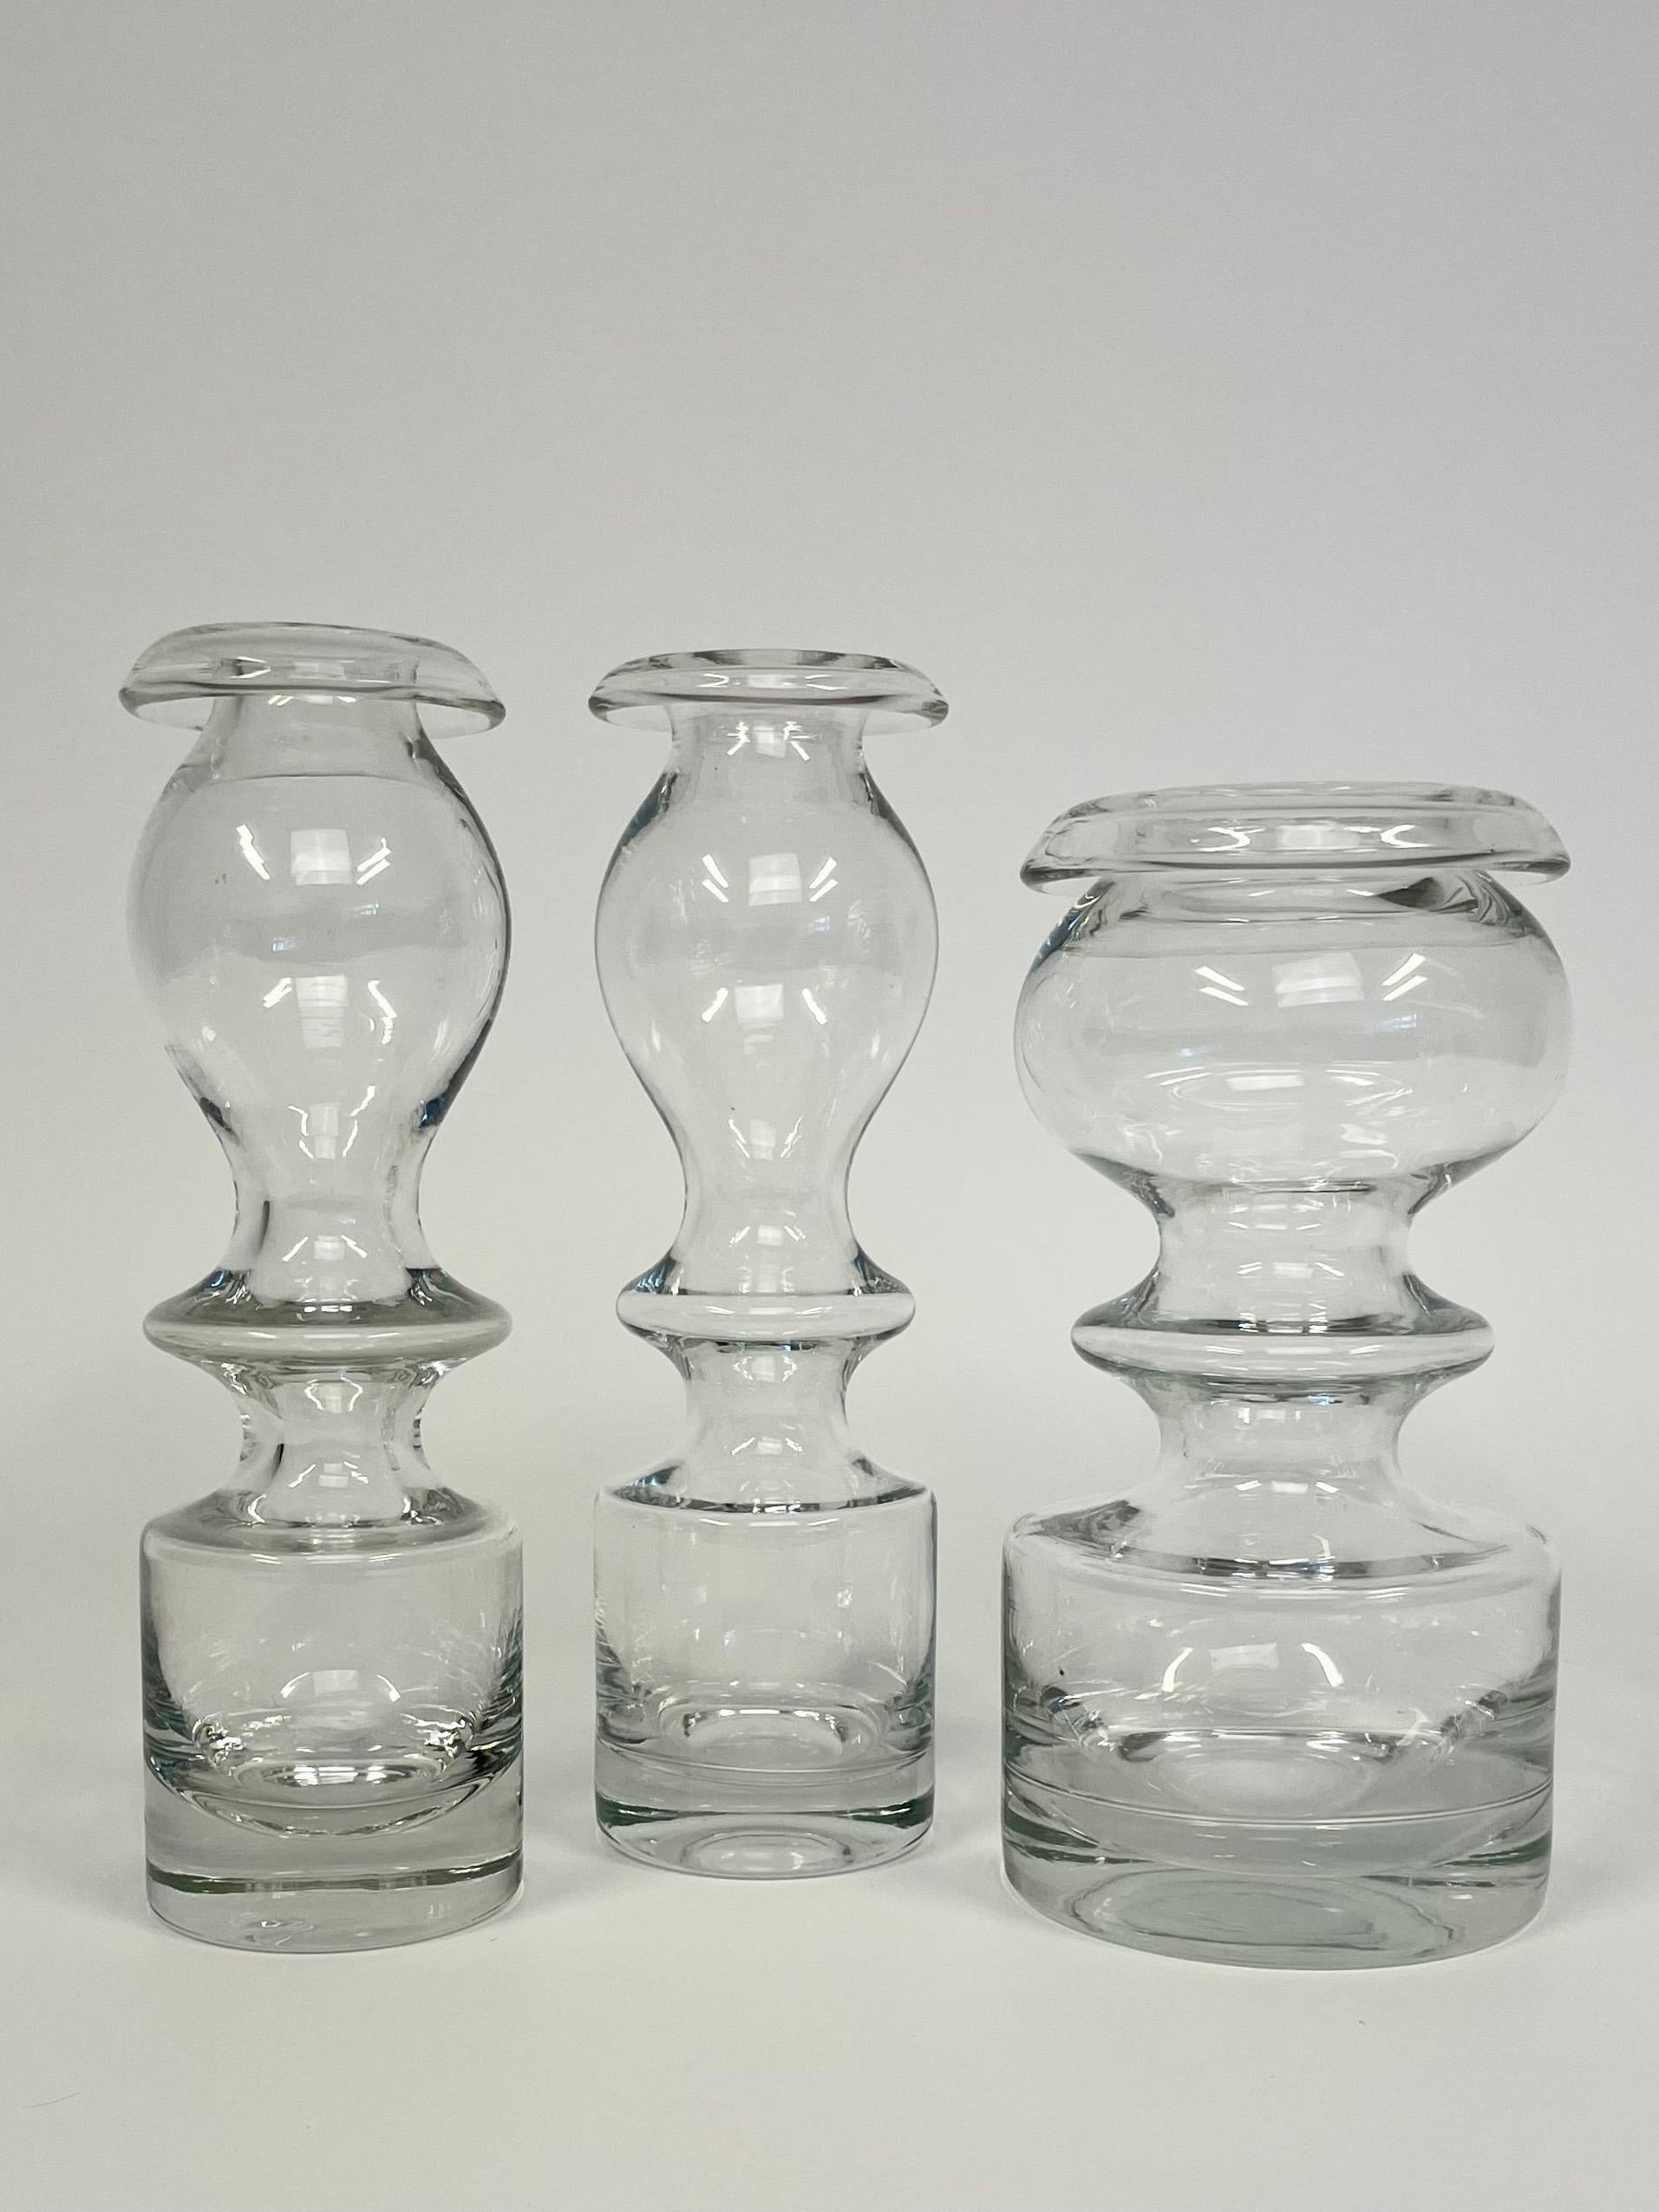 Five Pompadour Vases Collection by Finnish Designer Nanny Still for Riihimäen  In Good Condition For Sale In Örebro, SE